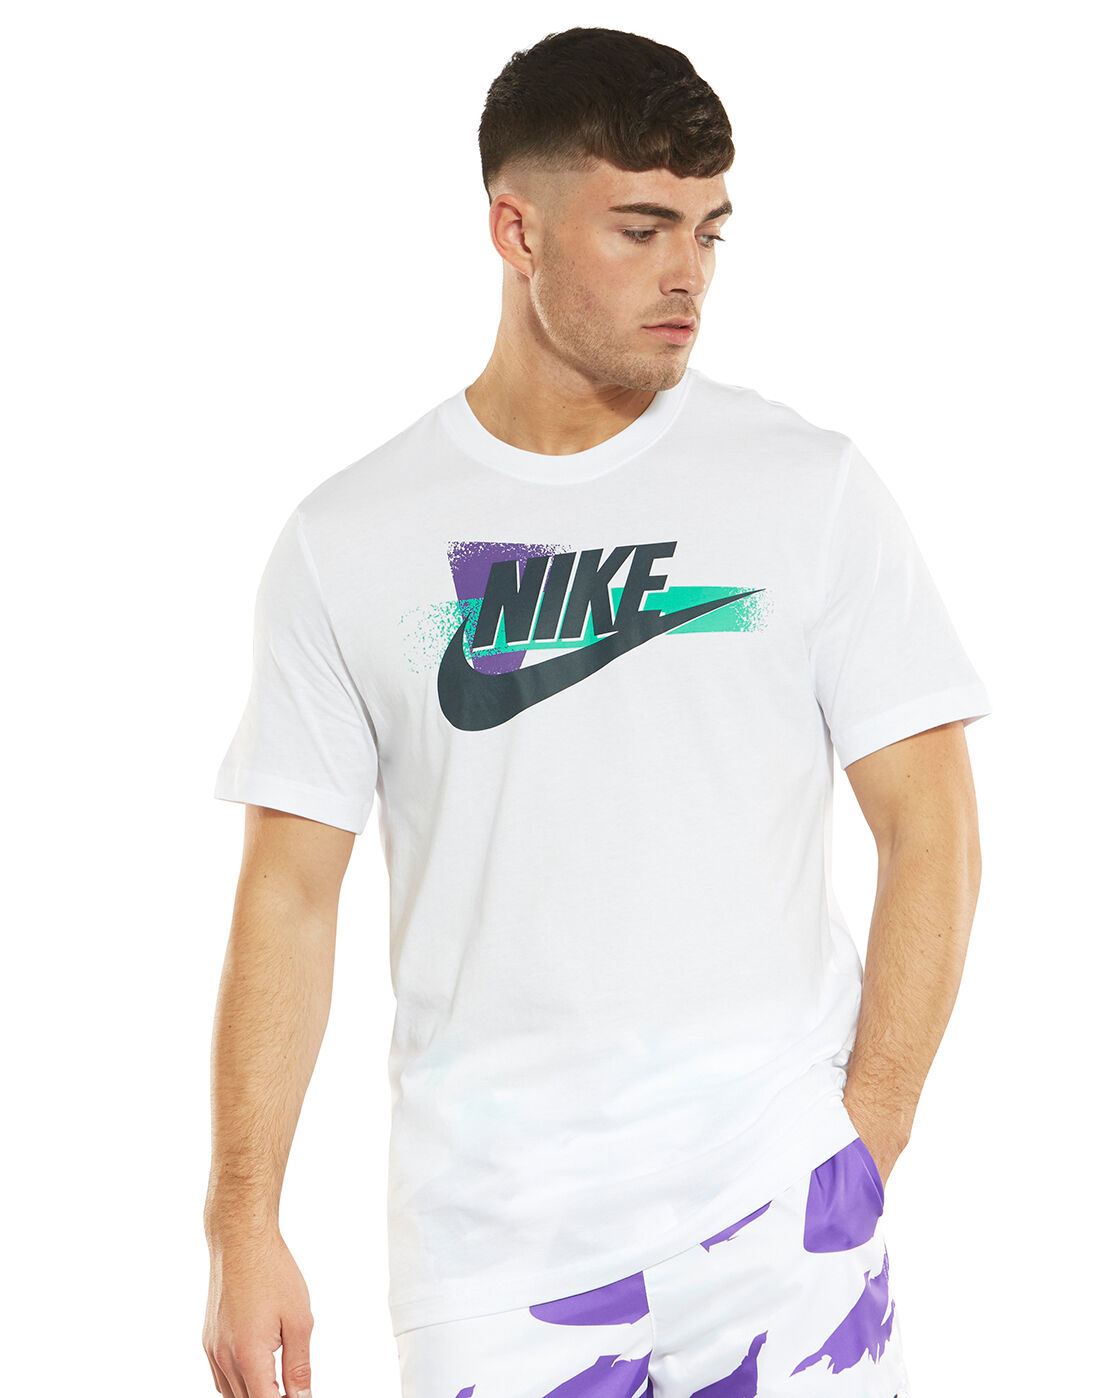 white nike shirt with purple logo